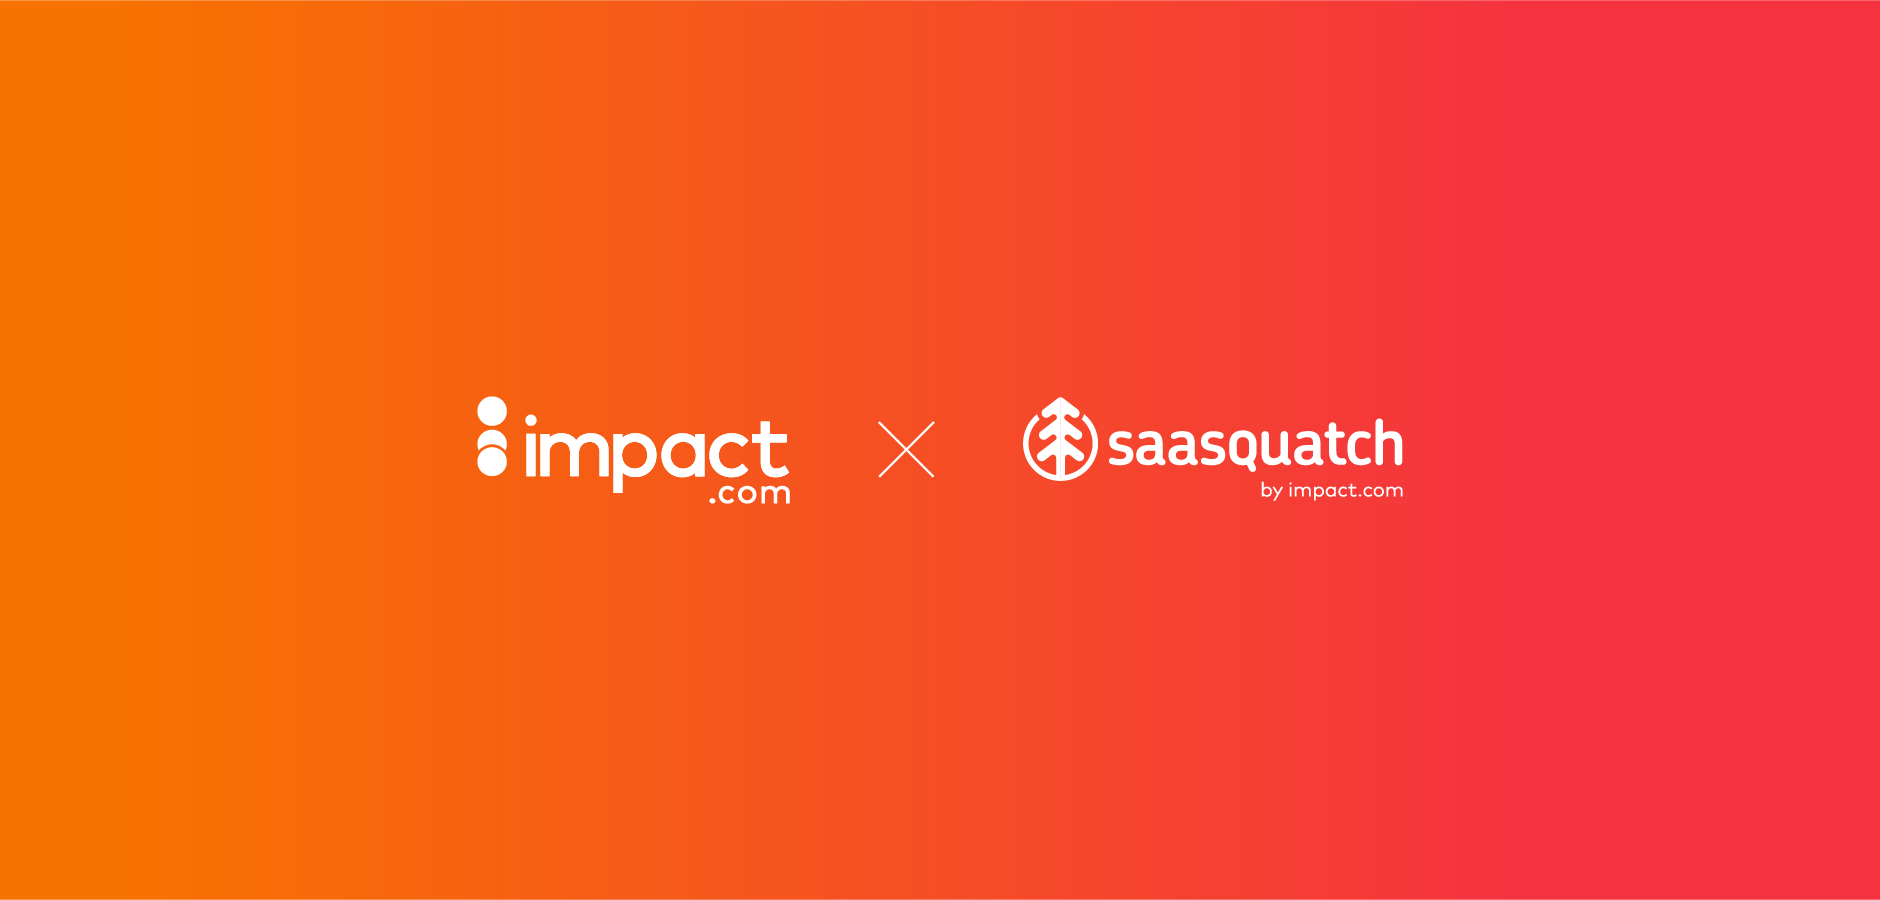 SaaSquatch Promo Assets